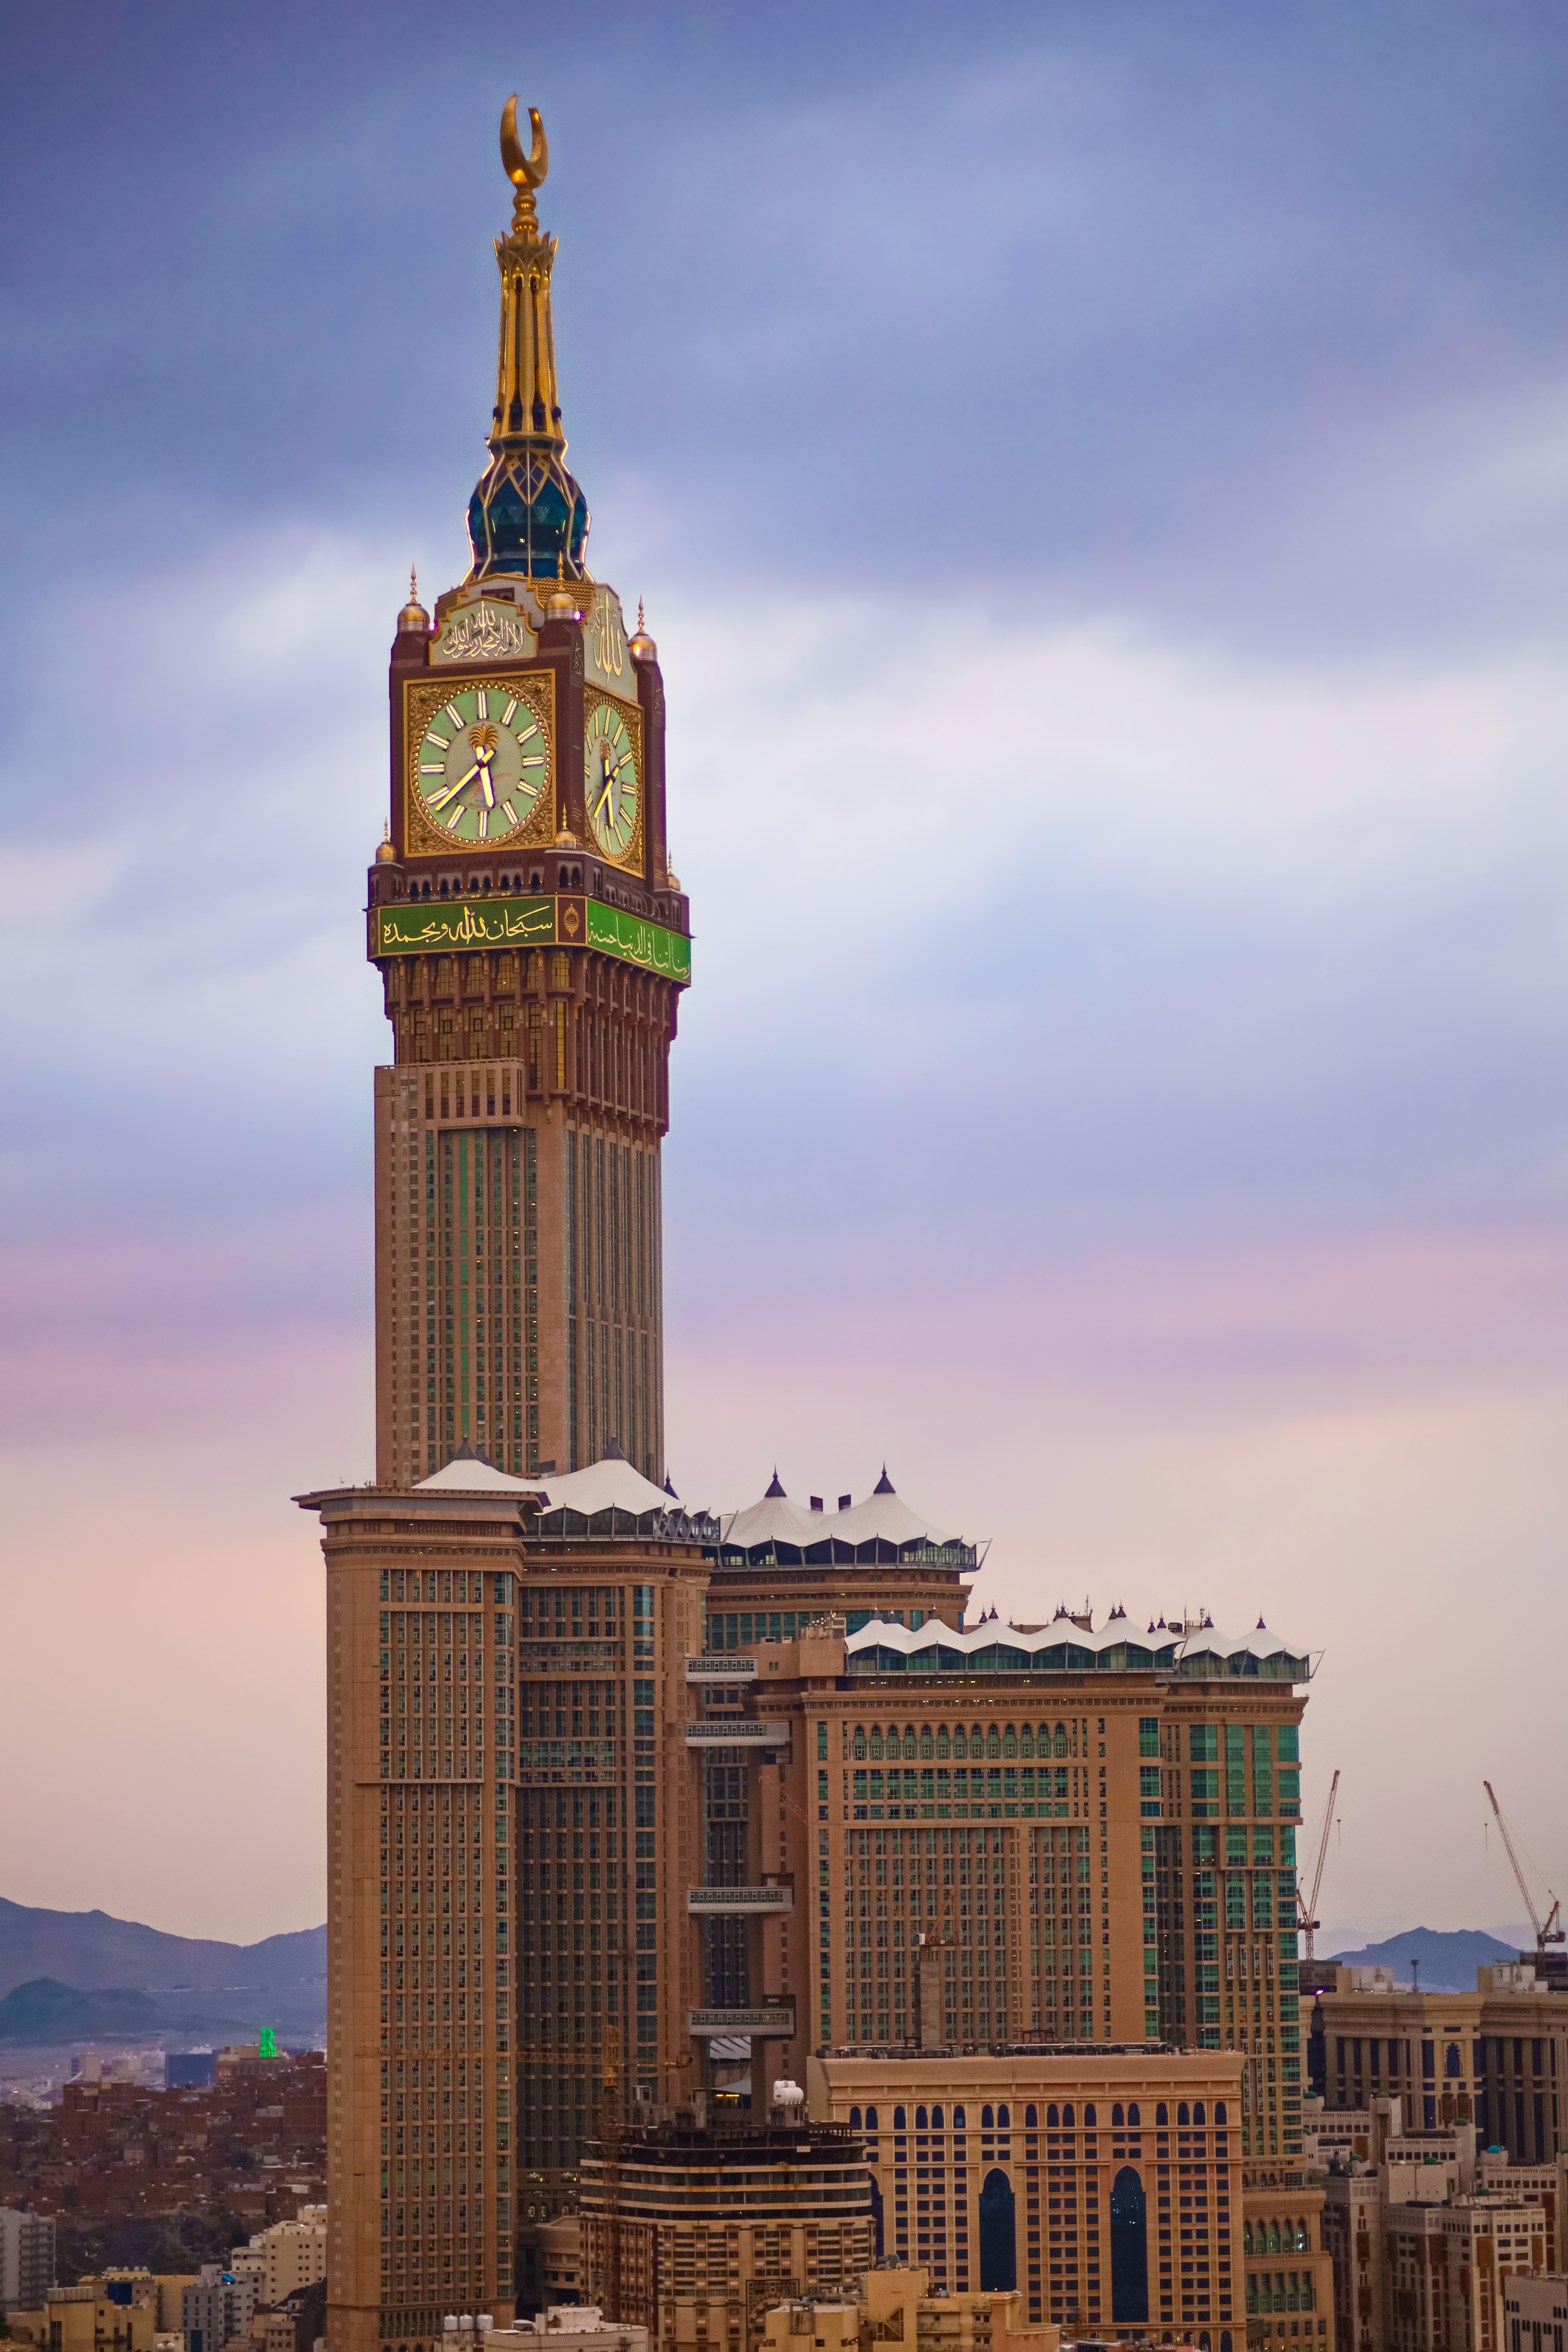 Mecca , Saudi Arabia - Zam zam Tower or Clock Tower - Abraj Al Bait - Masjid Al Haram